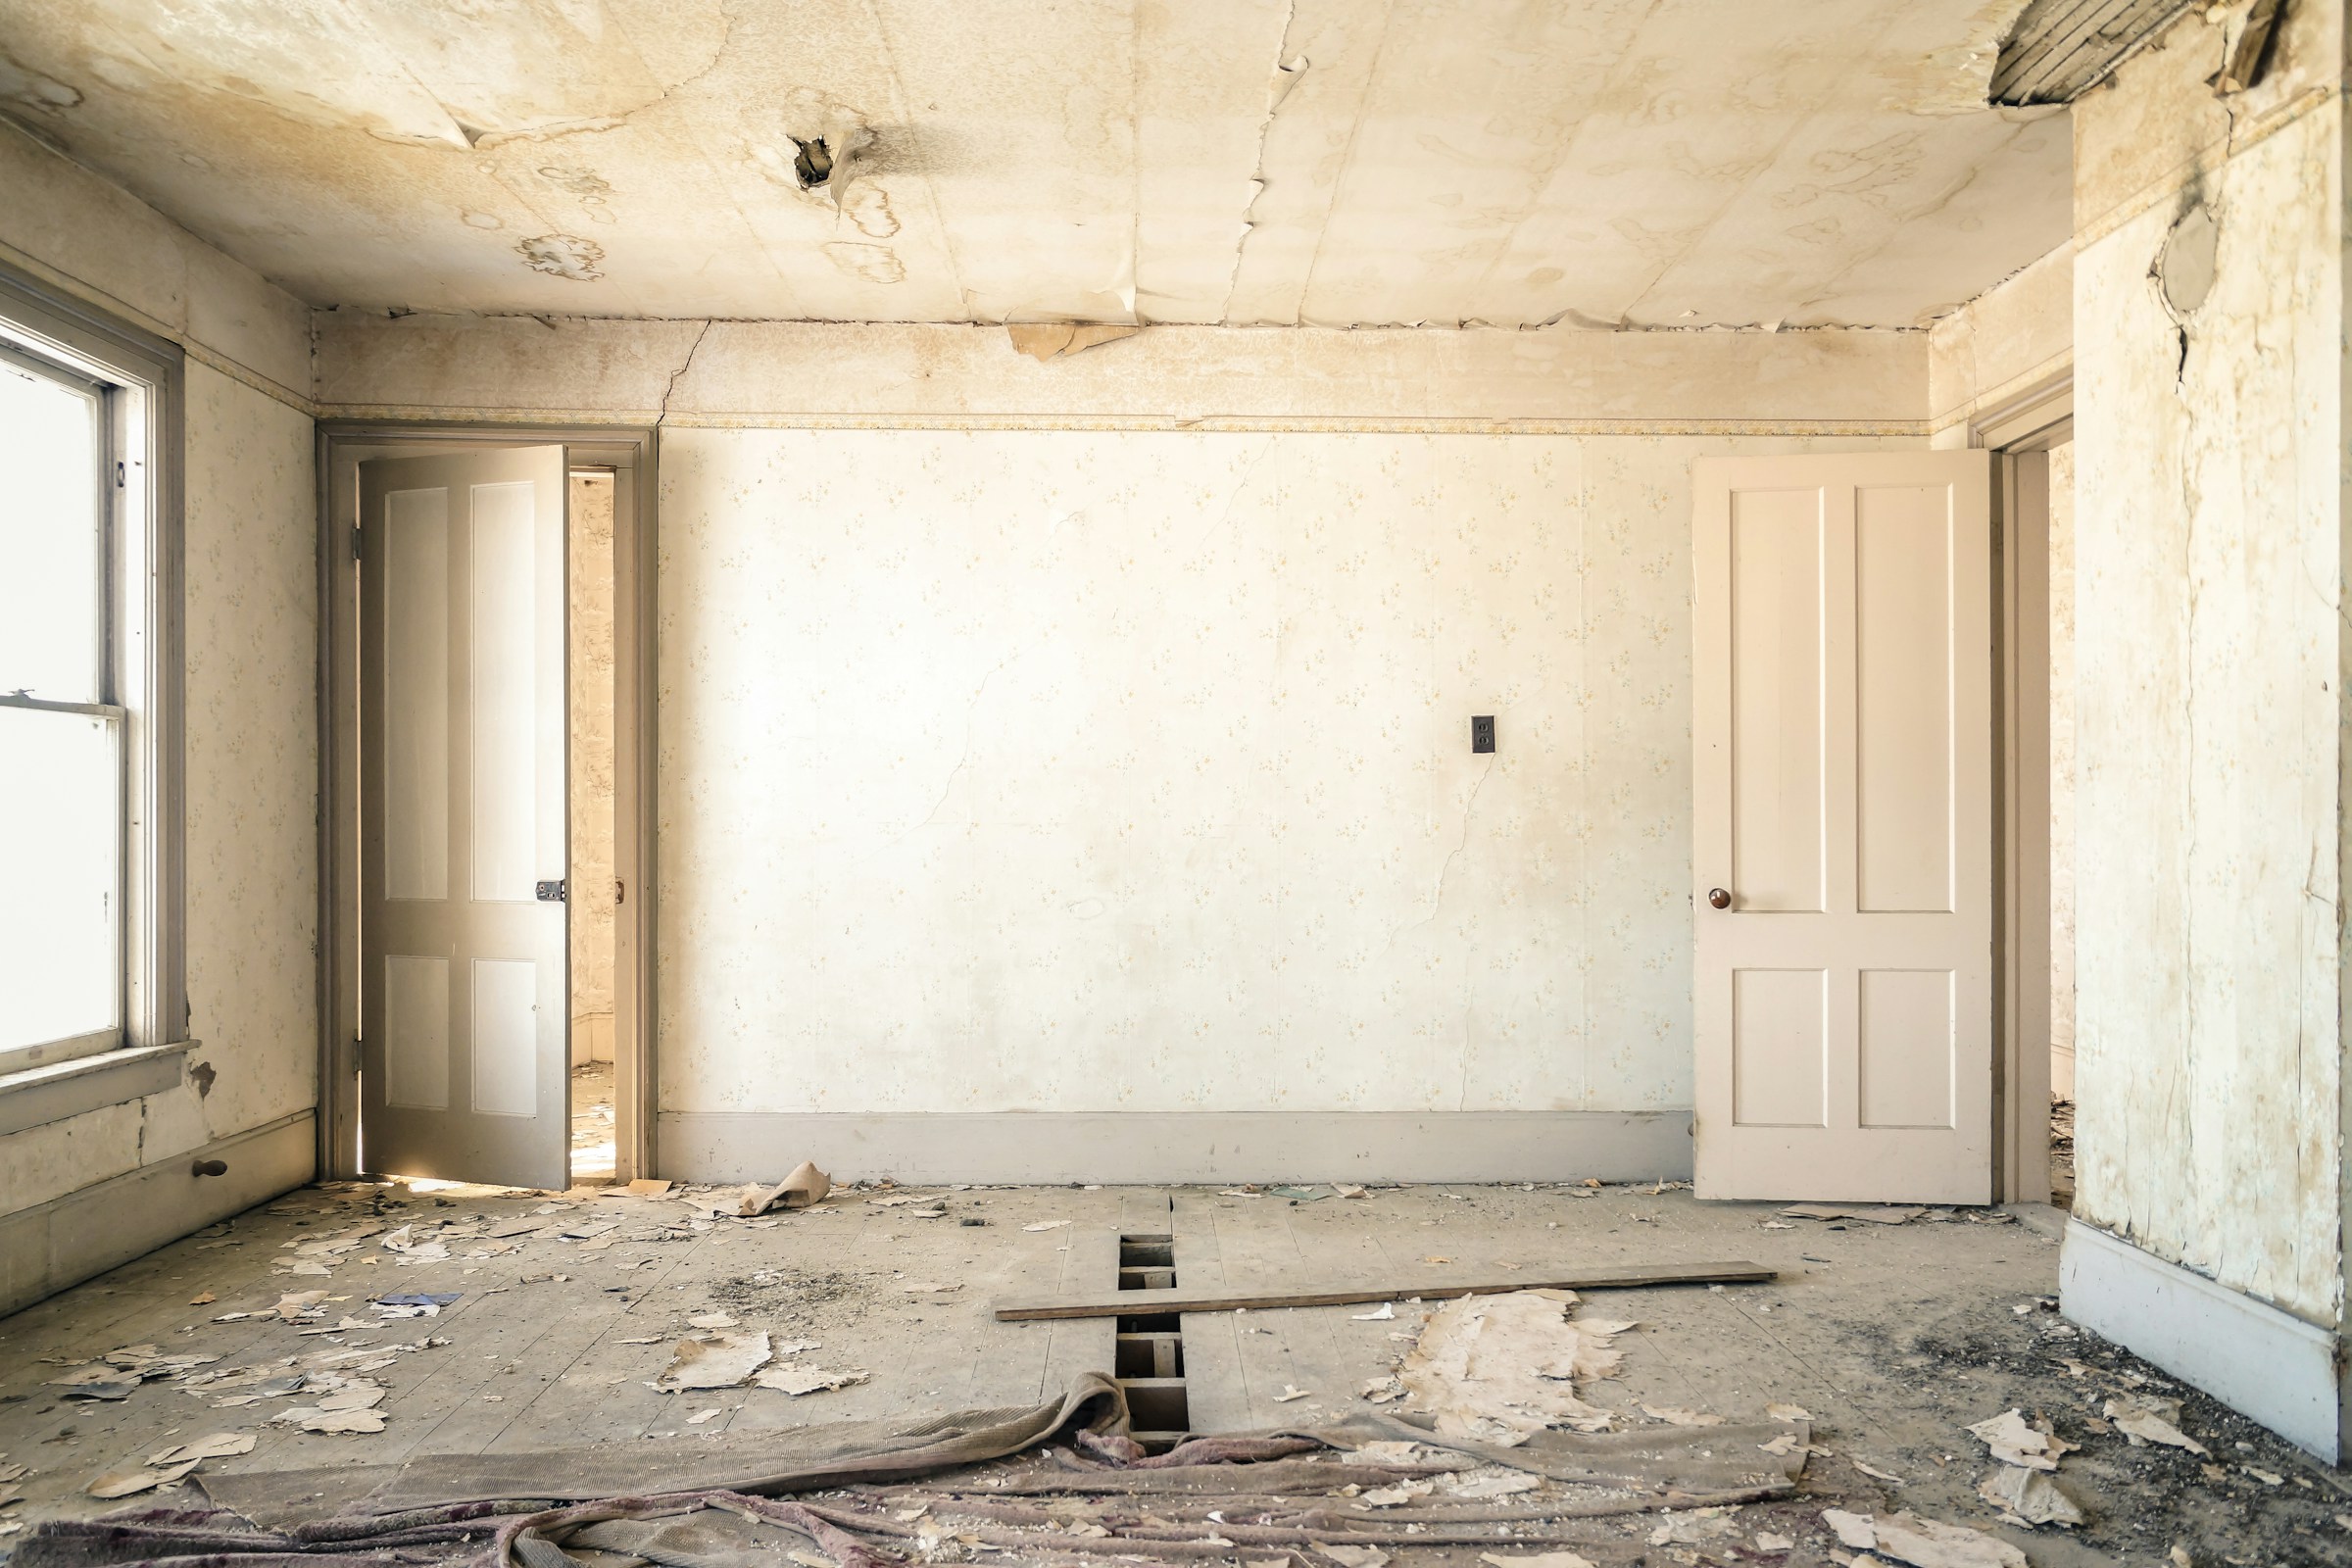 A home renovation | Source: Unsplash